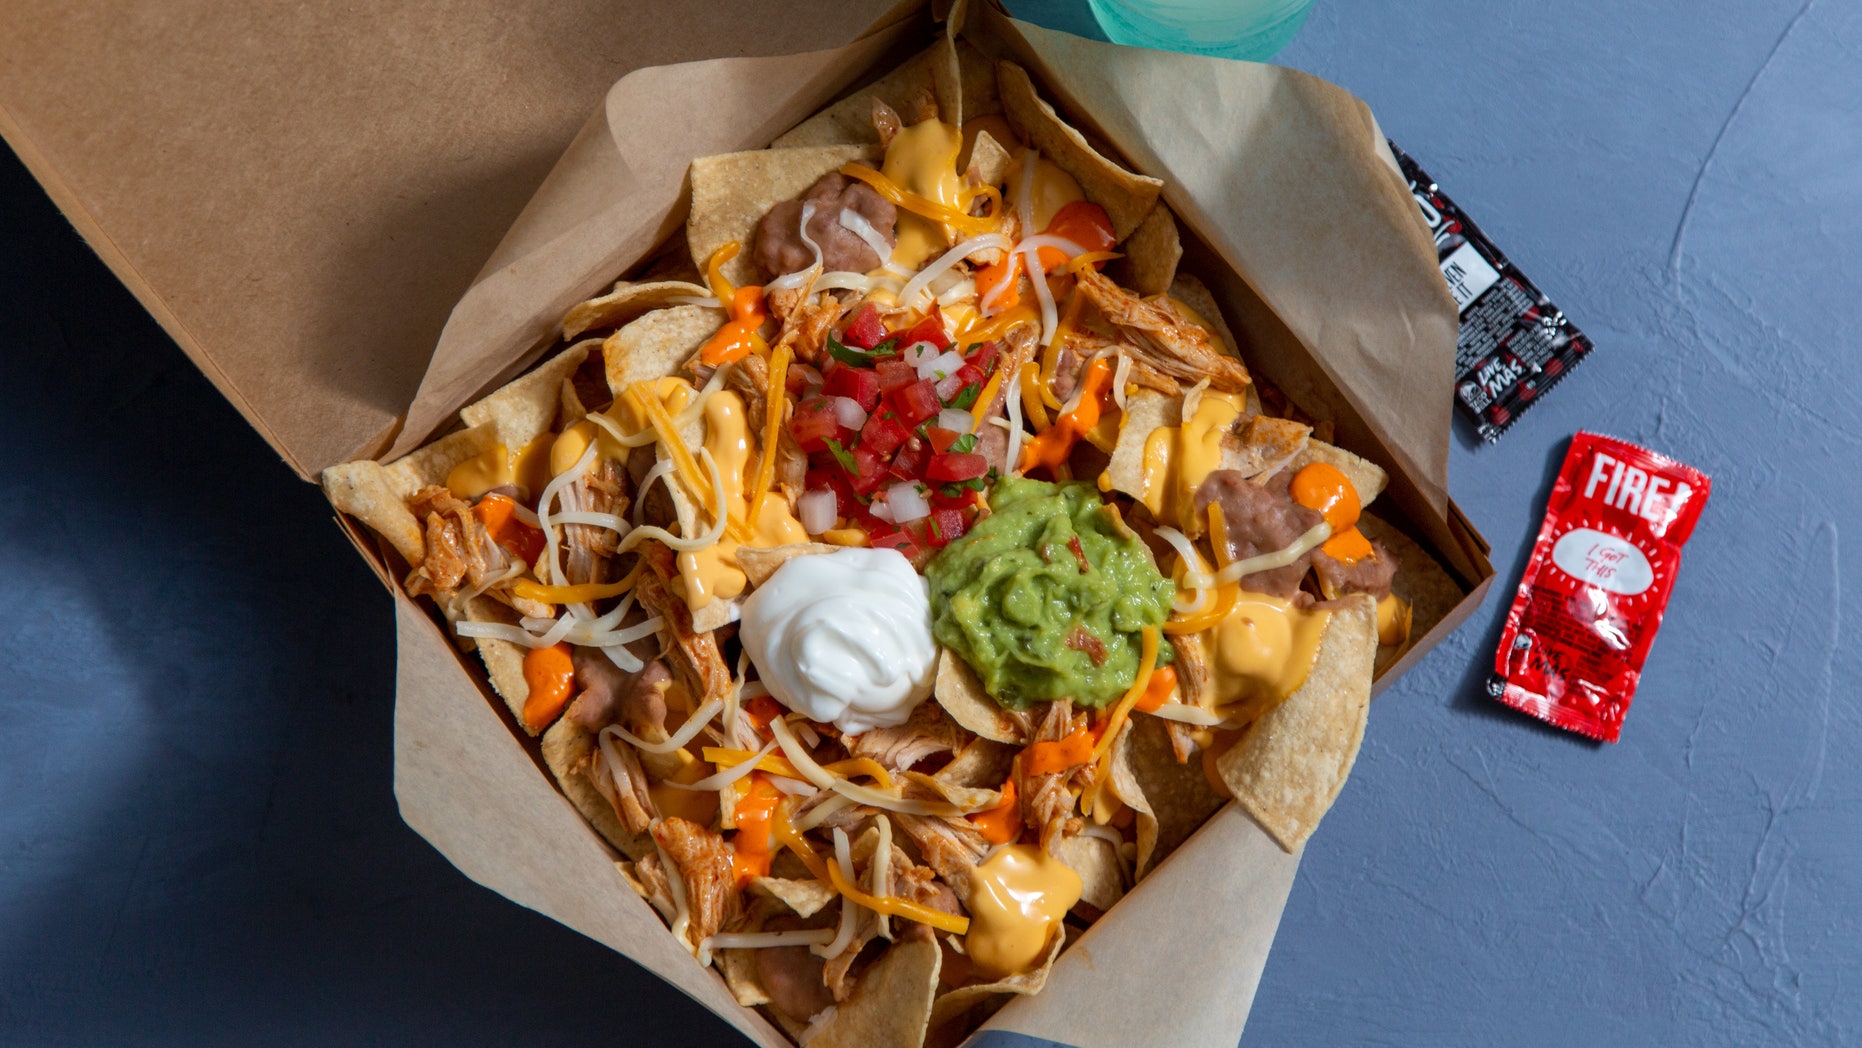 Taco Bell testing 3 new menu items, including nacho boxes Fox News